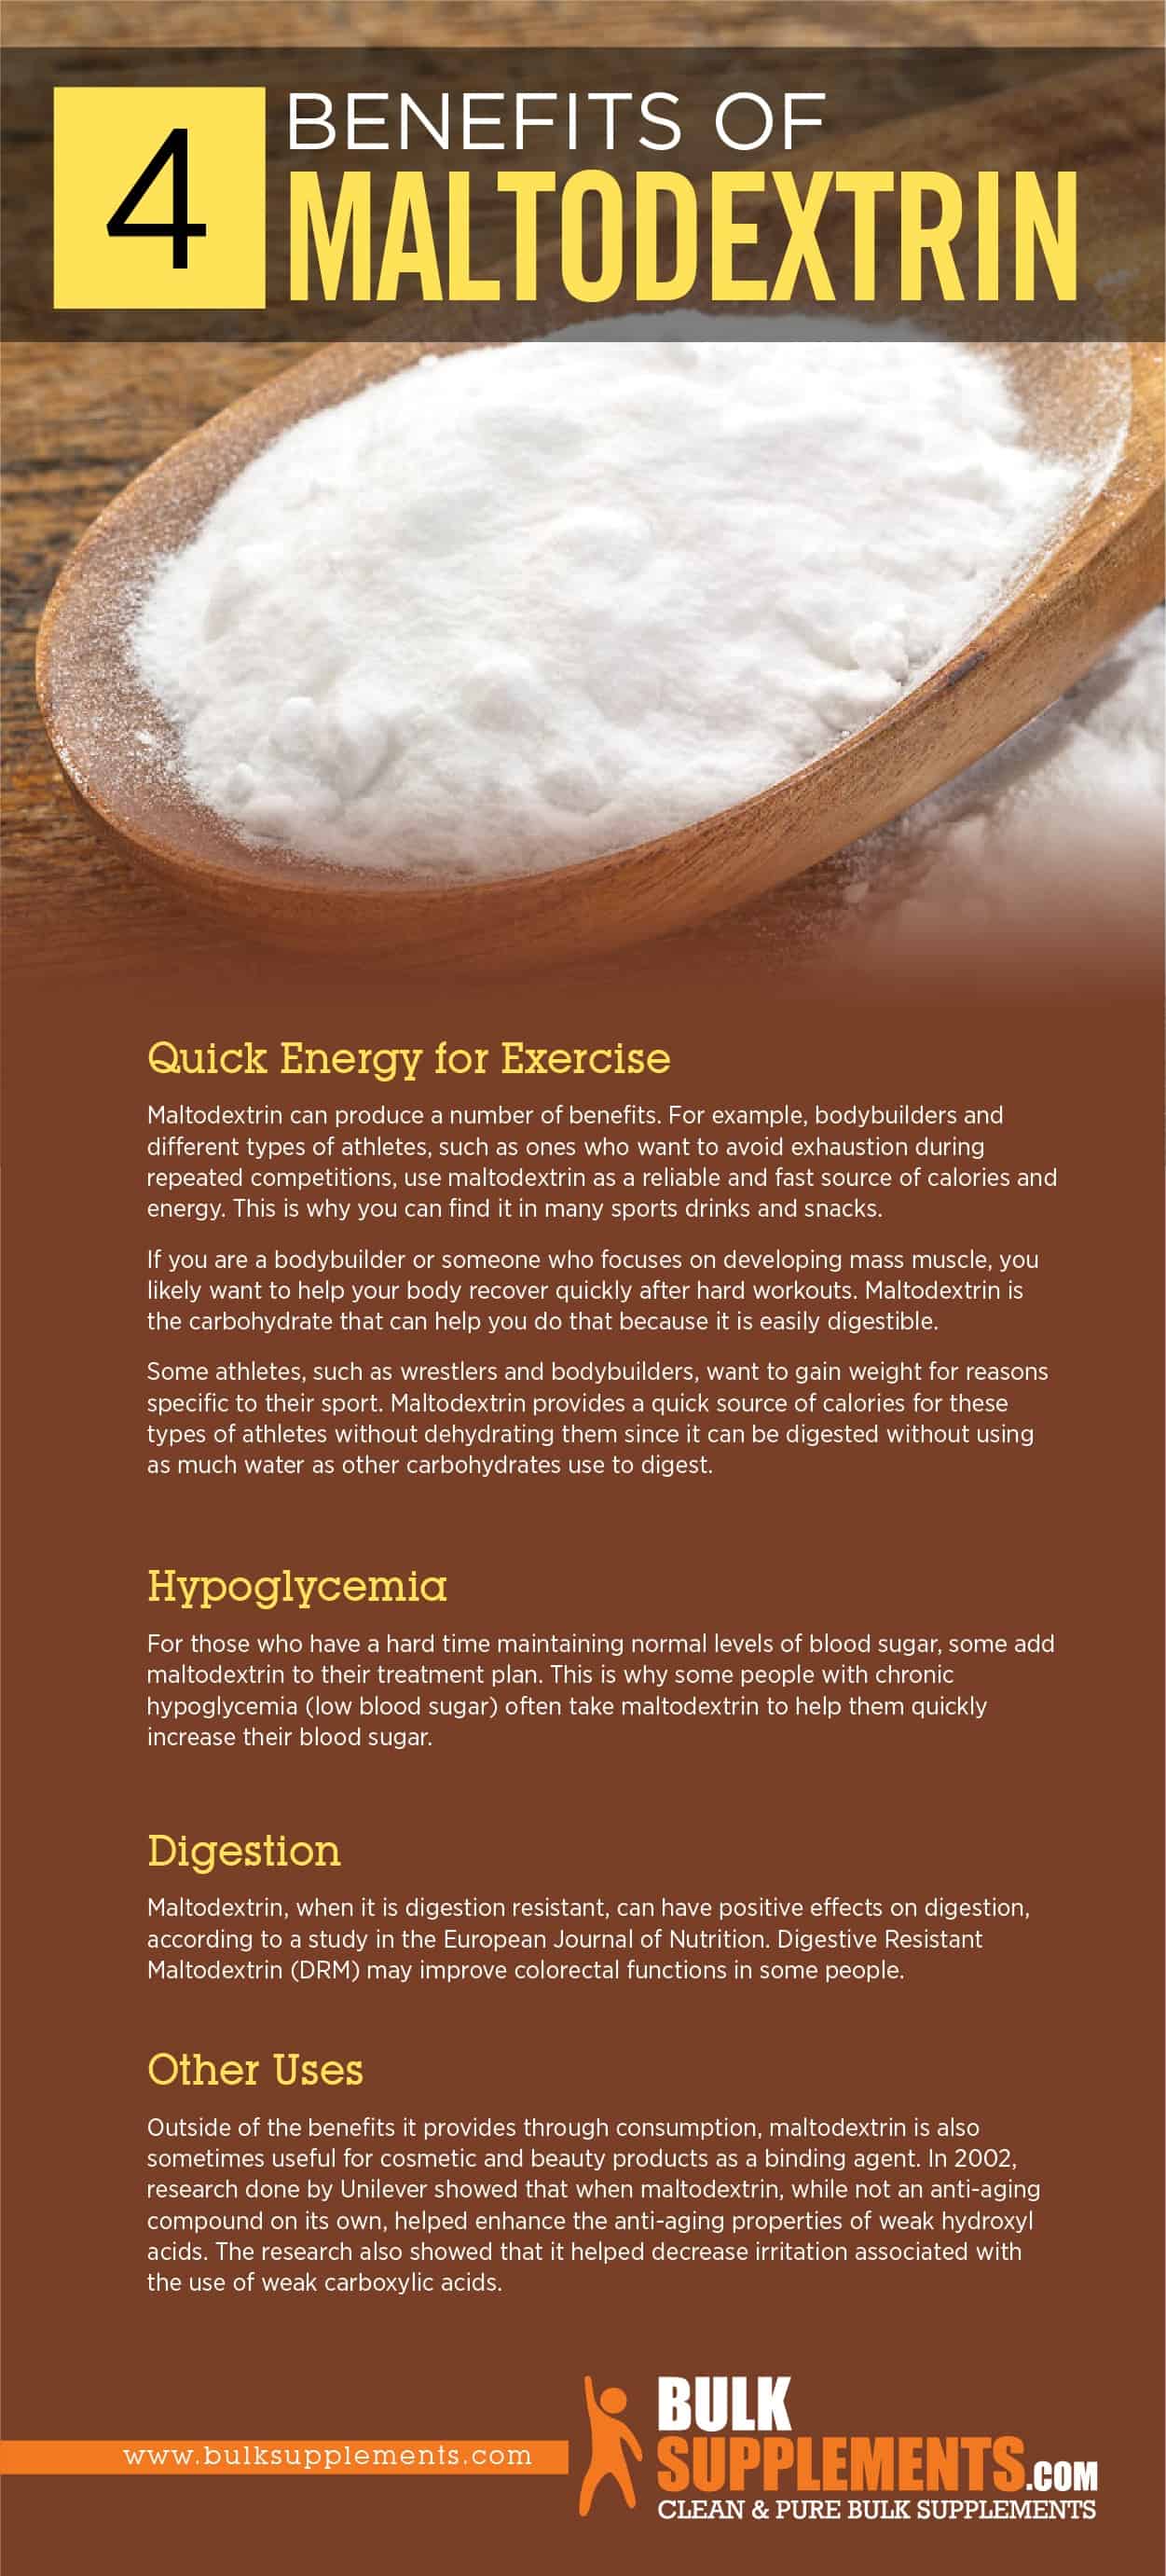 Benefits of maltodextrin powder